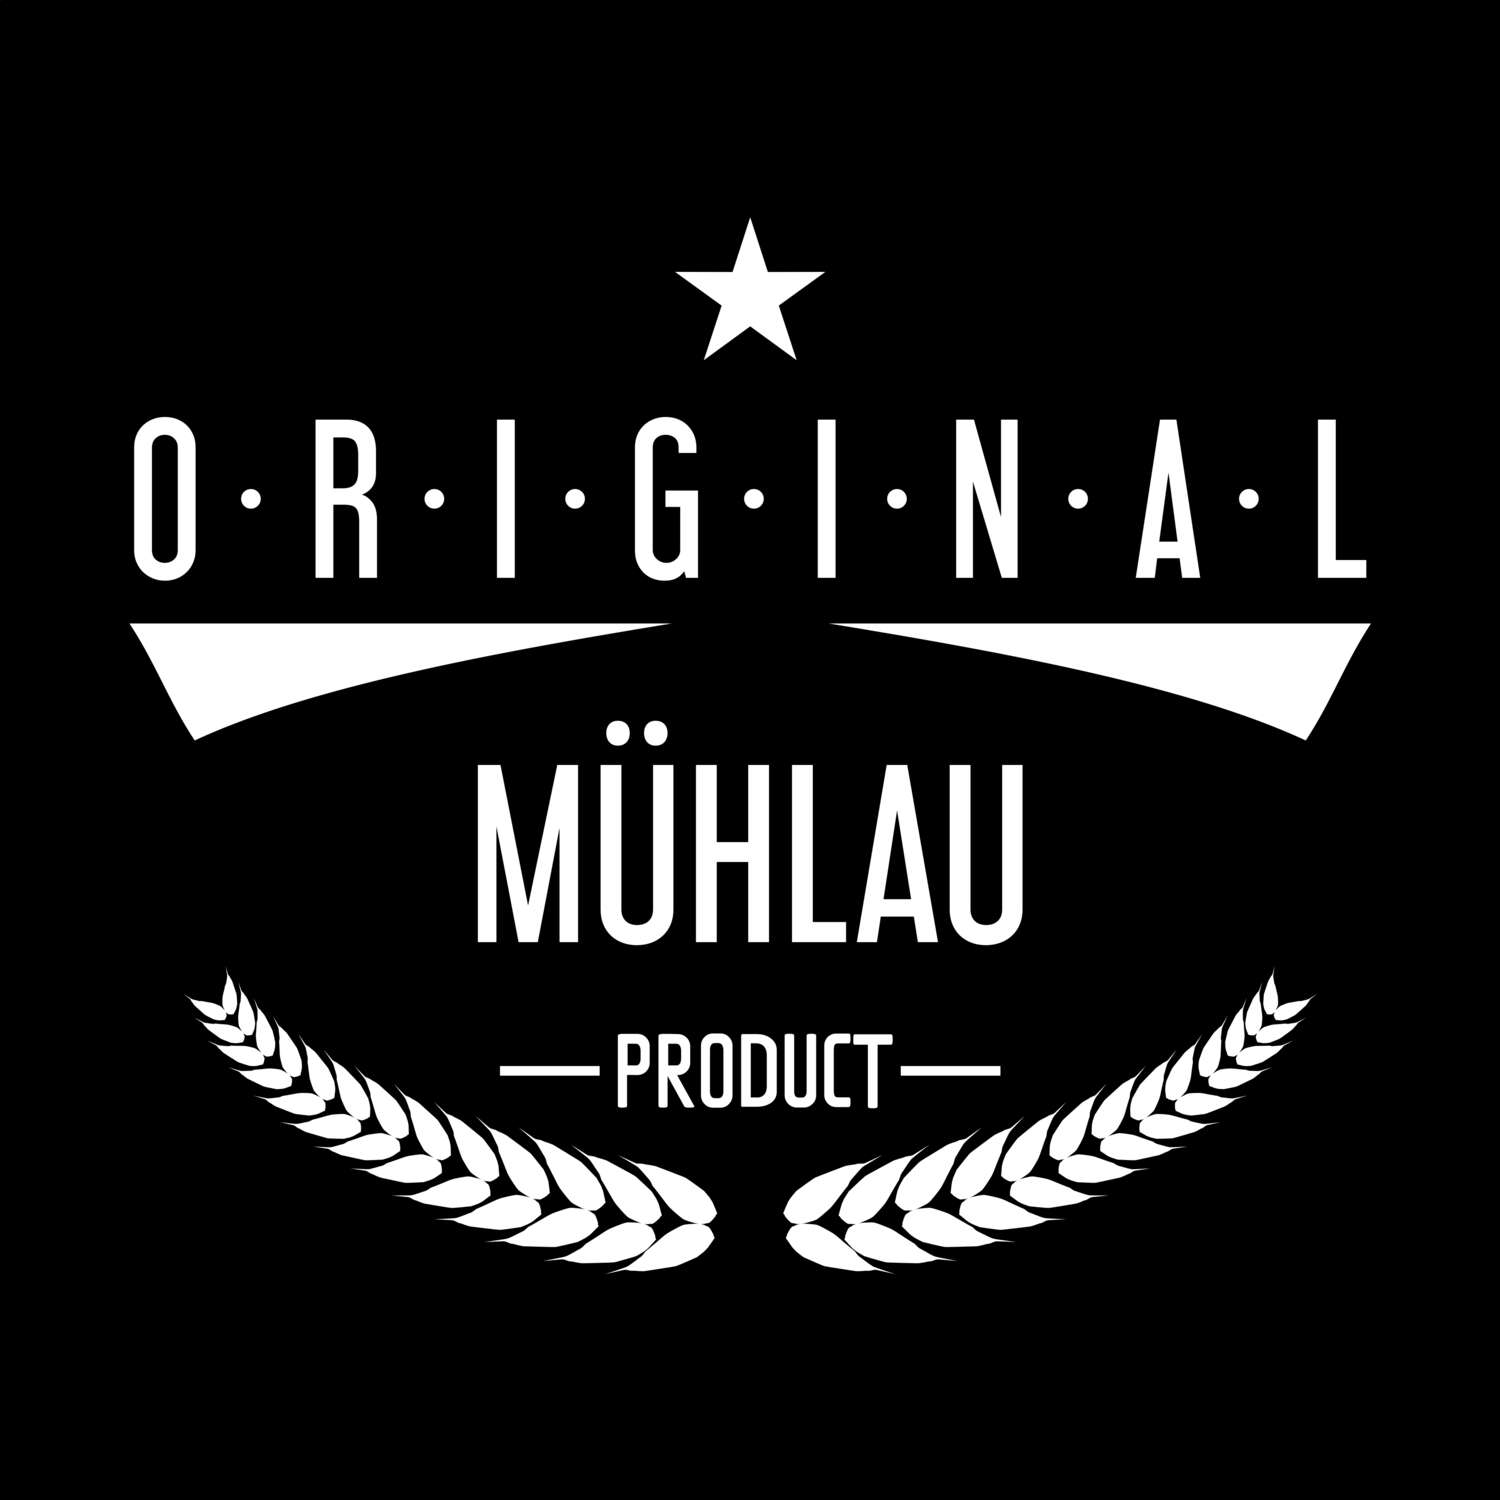 Mühlau T-Shirt »Original Product«